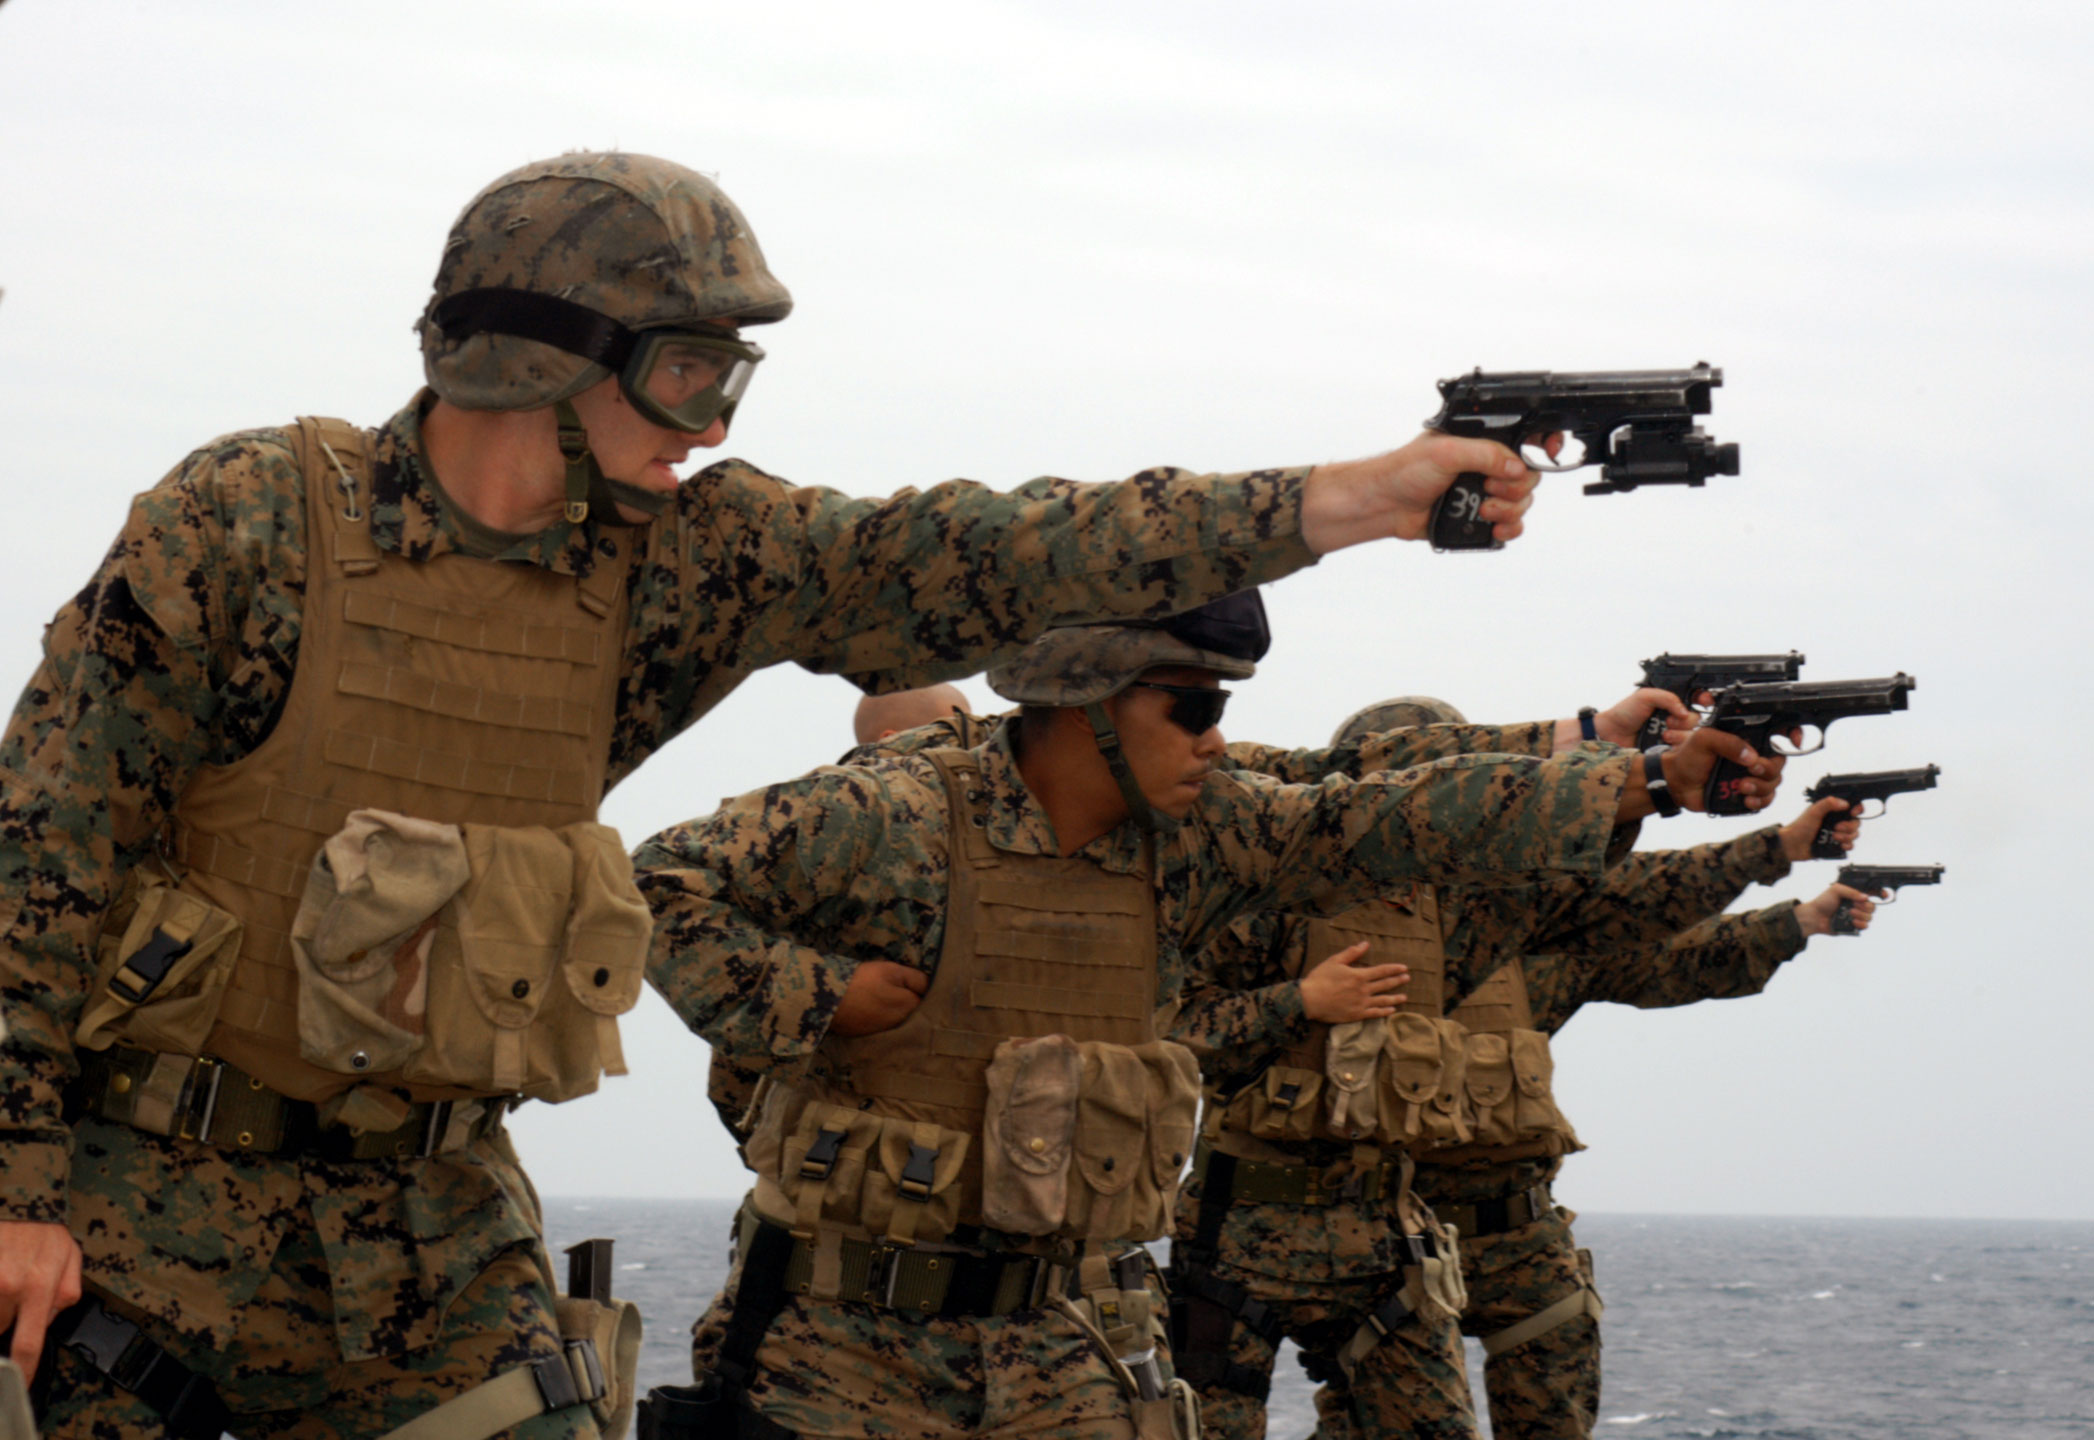 Fleet Anti-Terrorism Security Team | M9a1 Pistols